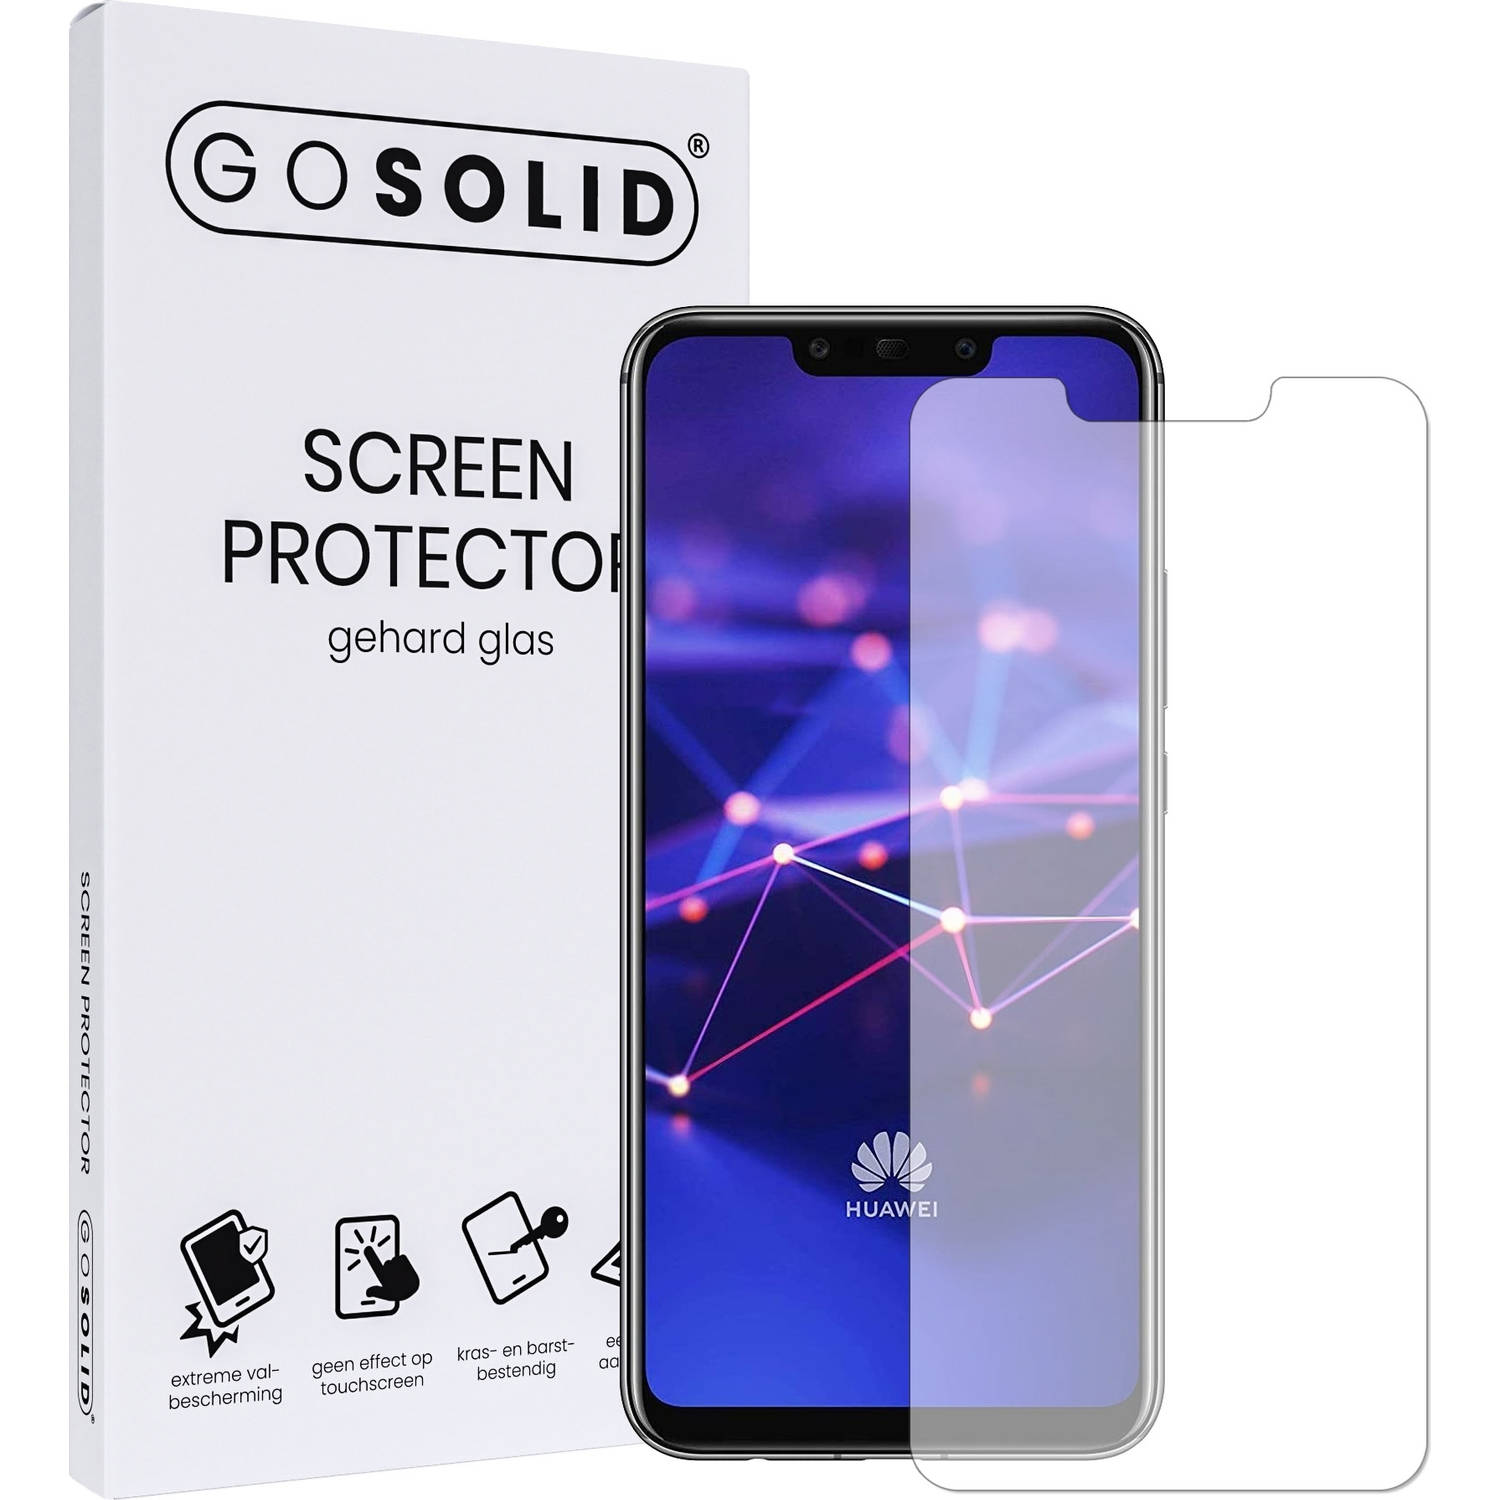 GO SOLID! Screenprotector voor Huawei Mate 20 Pro gehard glas